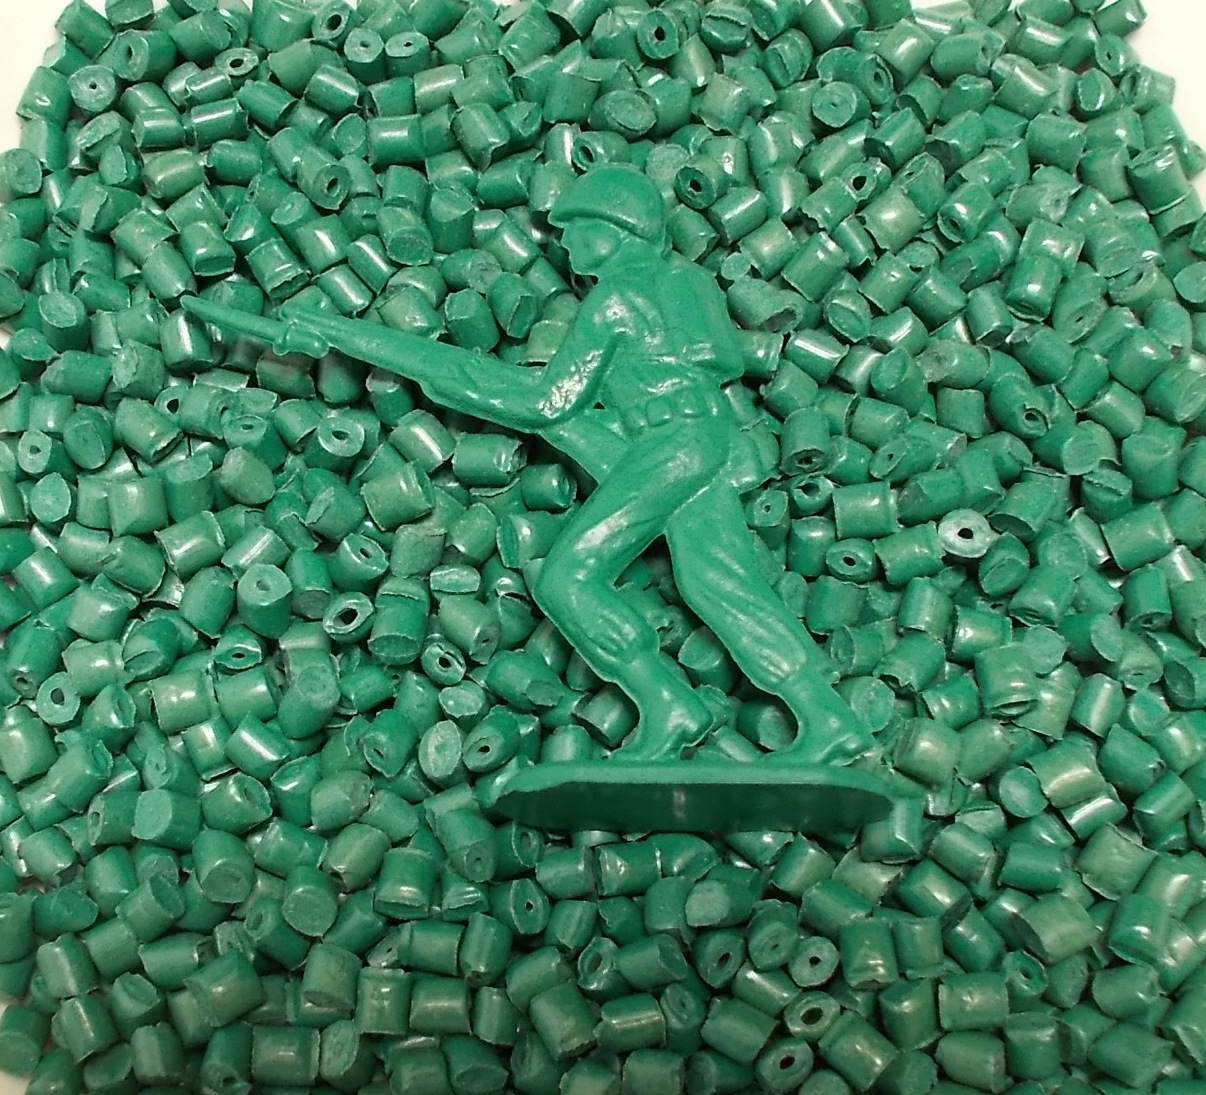 Green Polypropylene Pellets